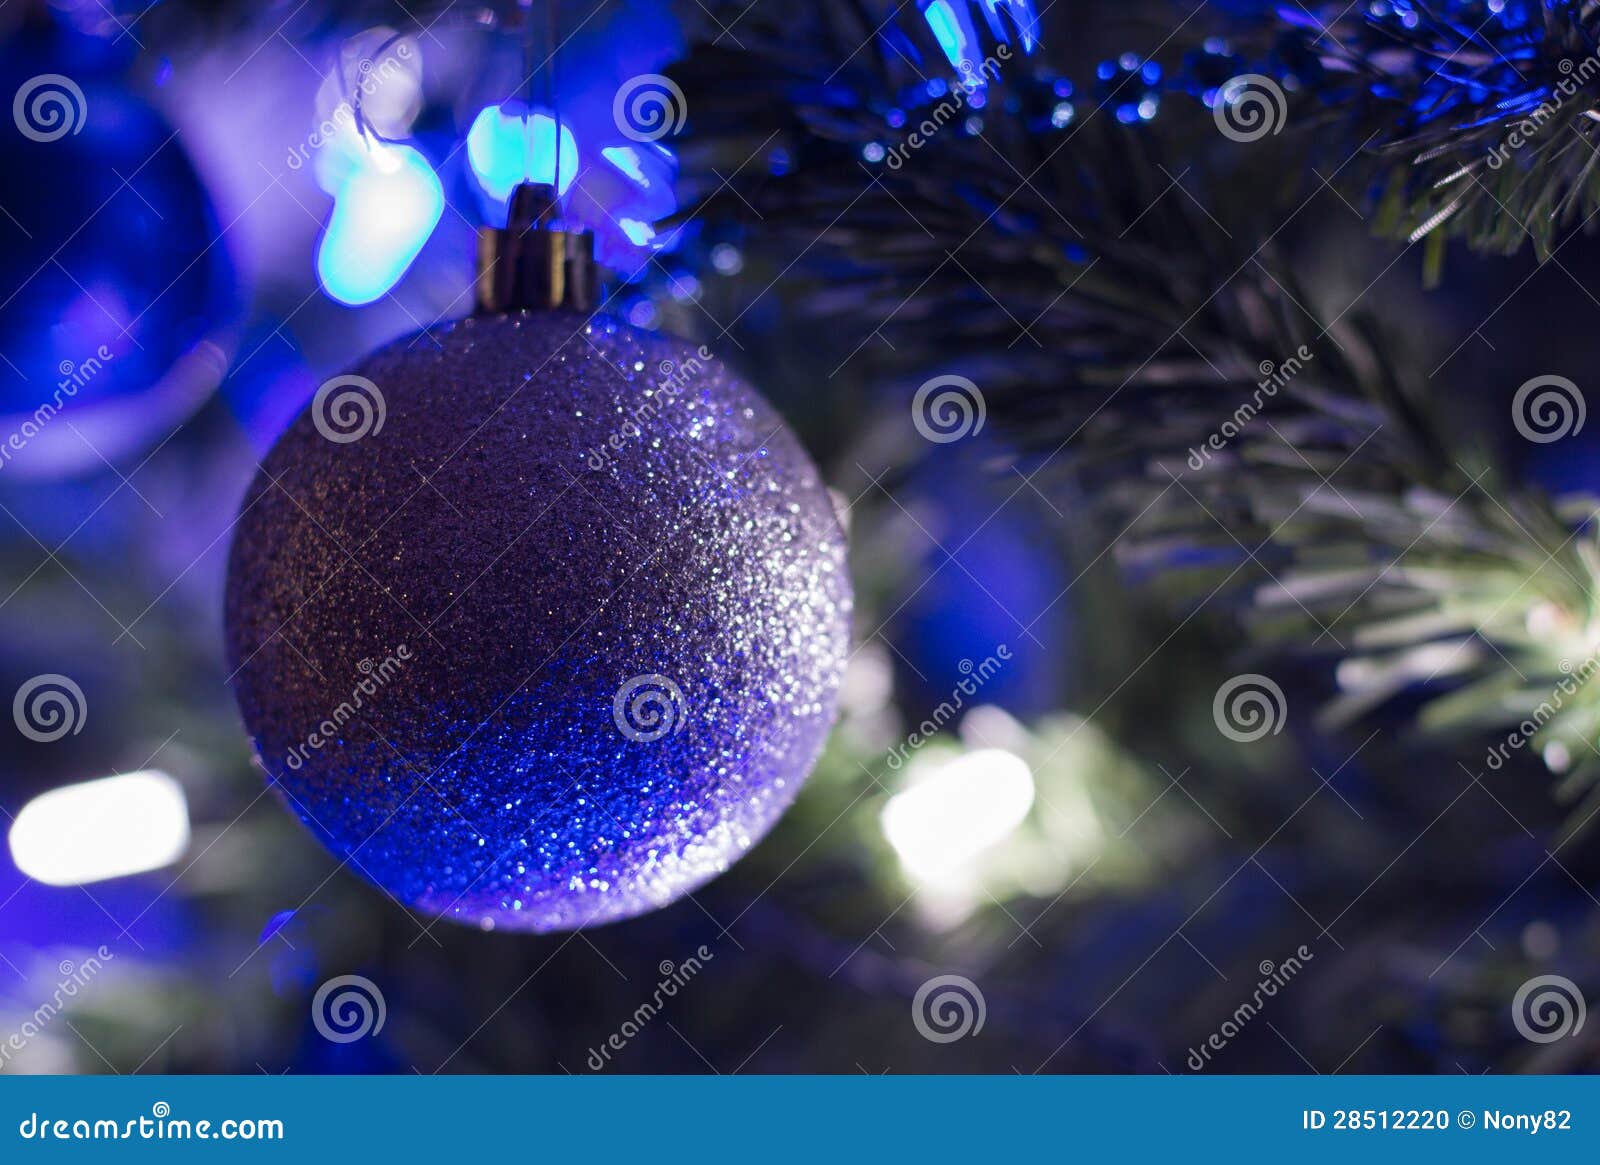 Christmas decoration stock photo. Image of december, seasonal - 28512220